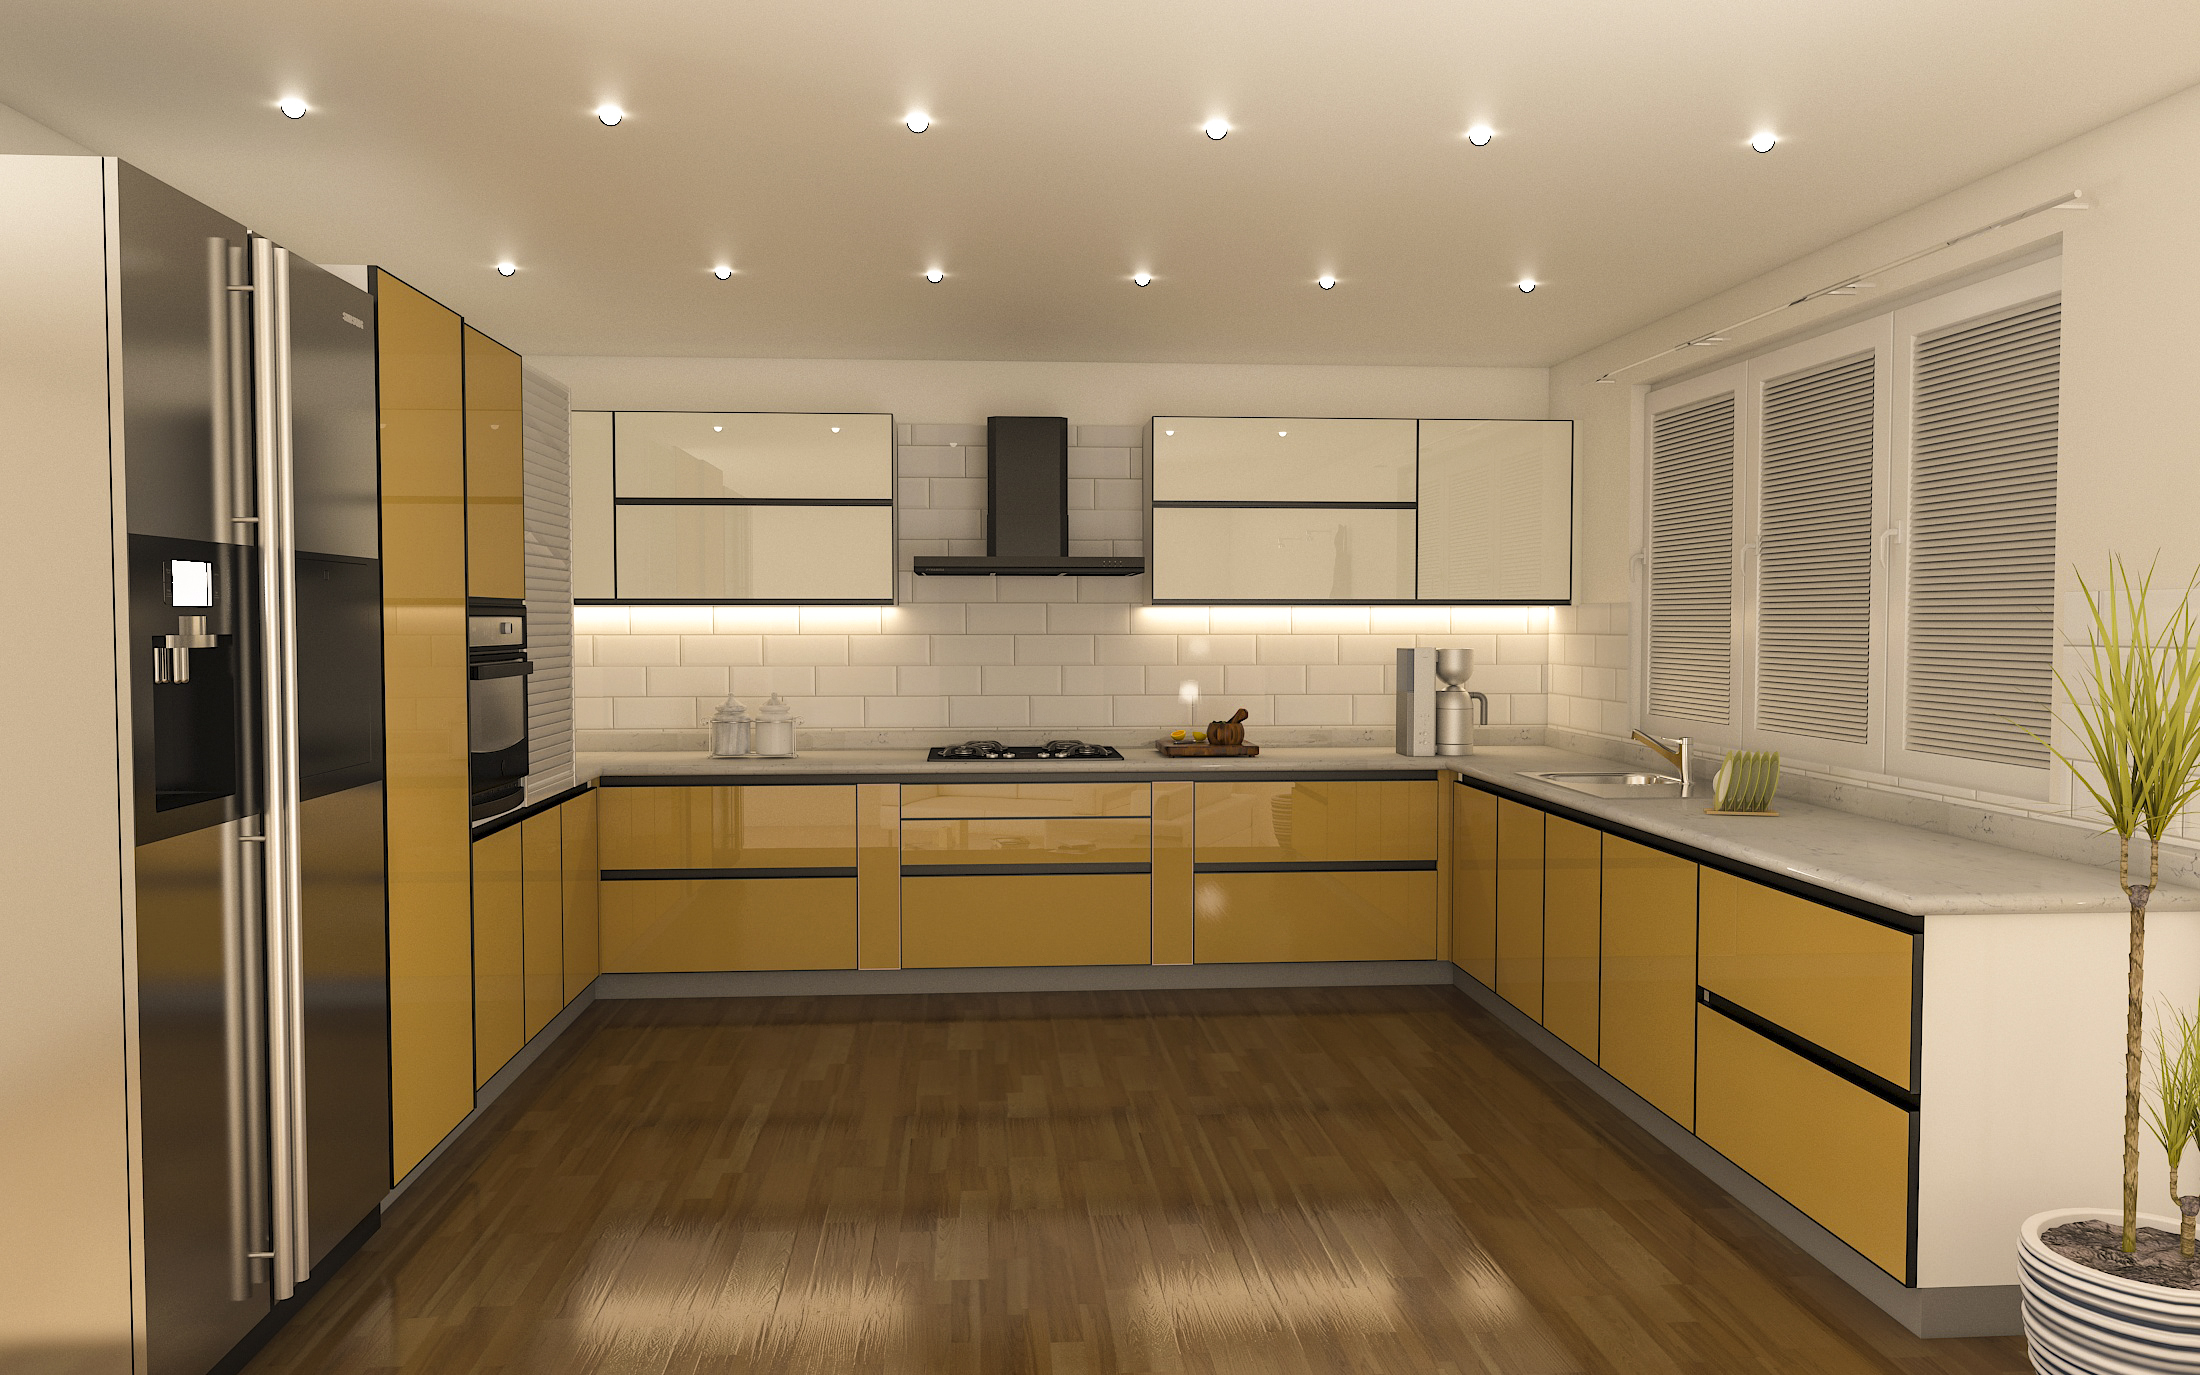 U-shape kitchen designed by moduleightt